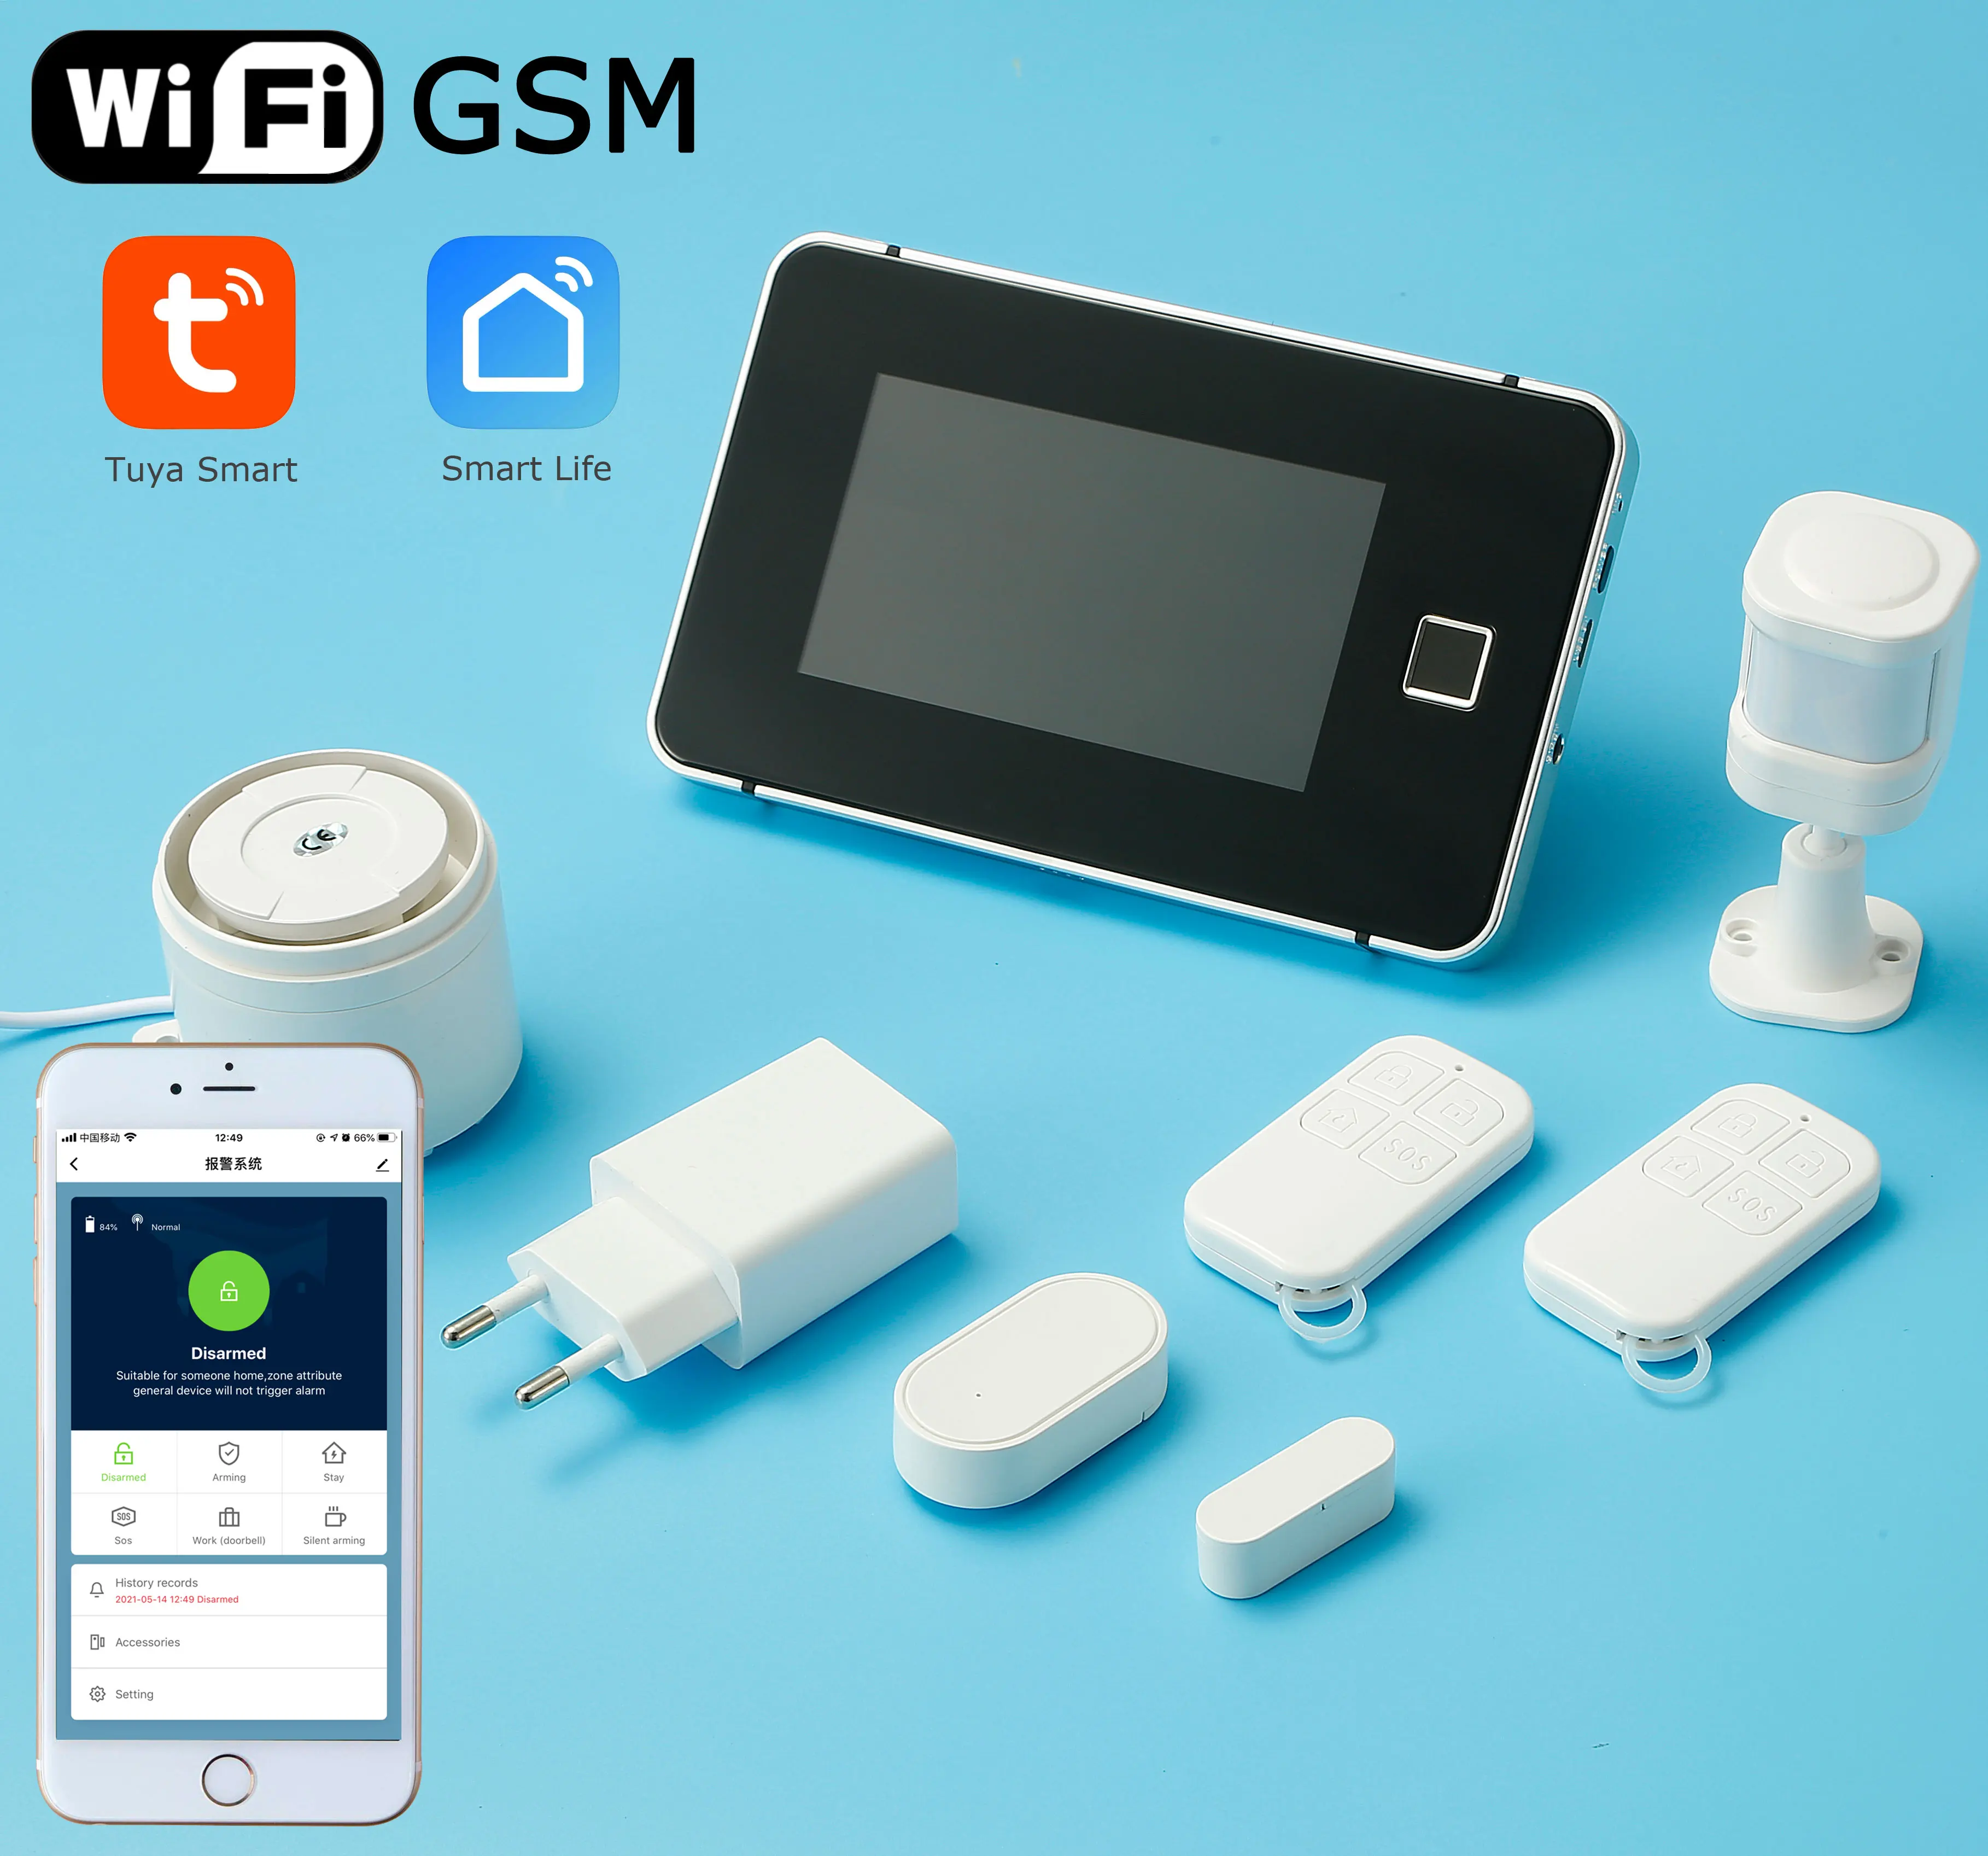 Layar penuh Wifi Tuya cerdas a-l-a-r-m sistem GSM keamanan pencuri rumah a-l-a-rm